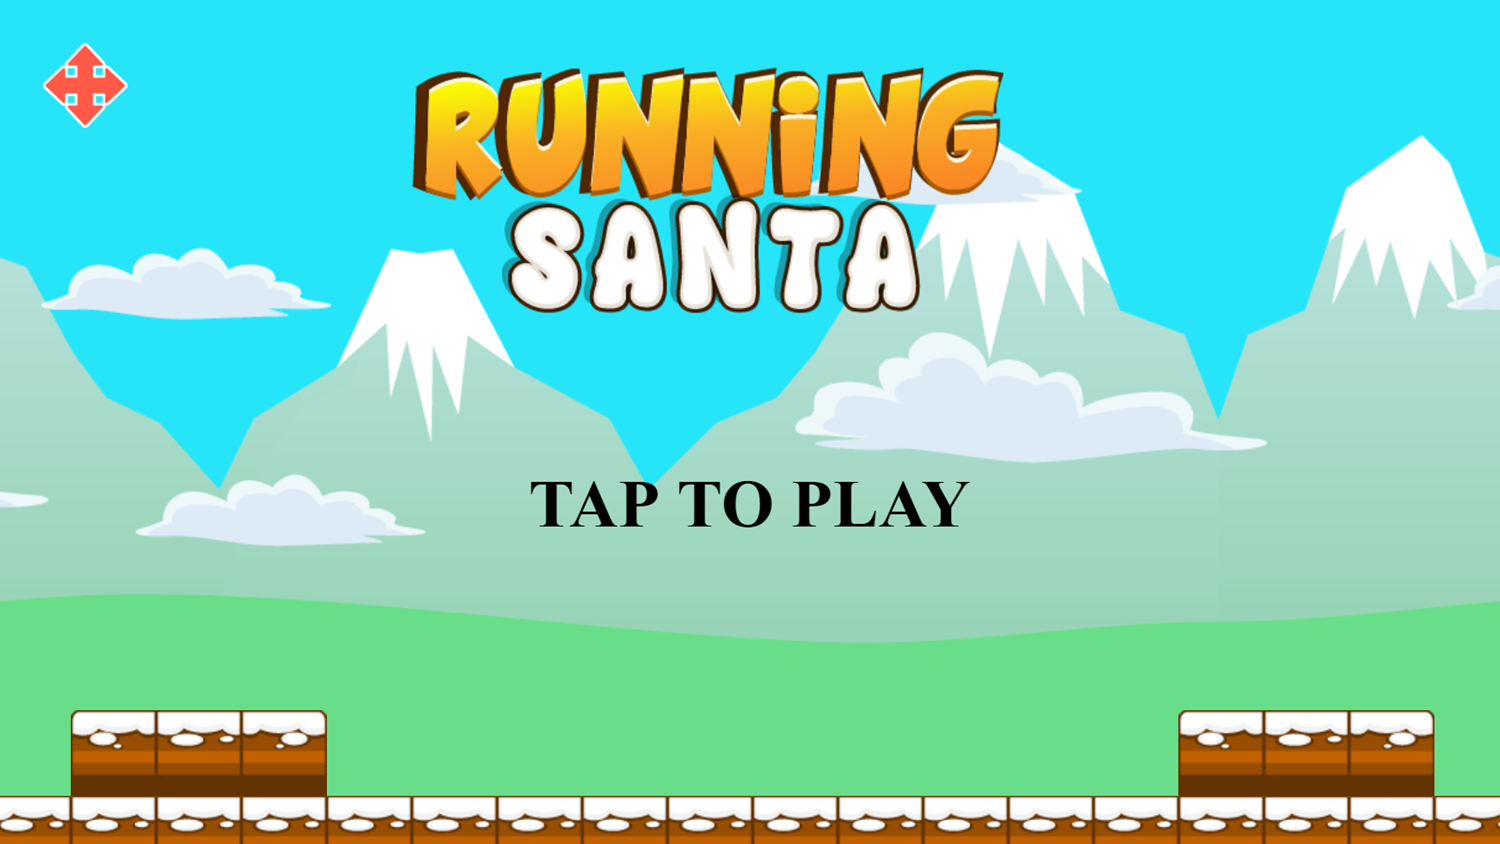 Running Santa Game Welcome Screen Screenshot.